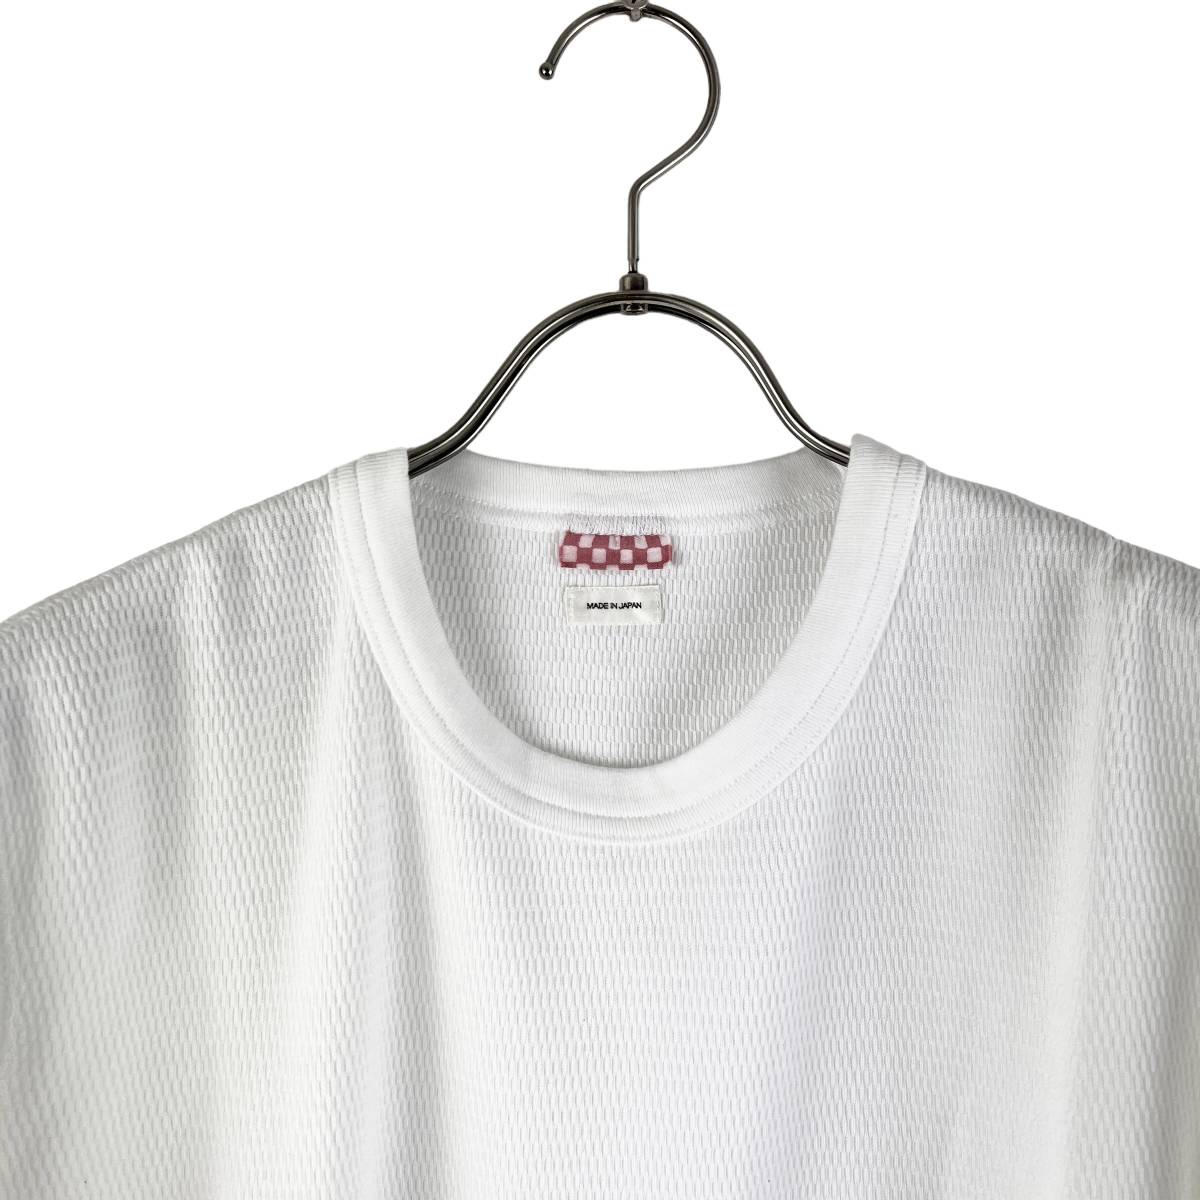 VISVIM(ビズビム) SUBLIG THERMAL CREW KNIT T Shirt (white) 2